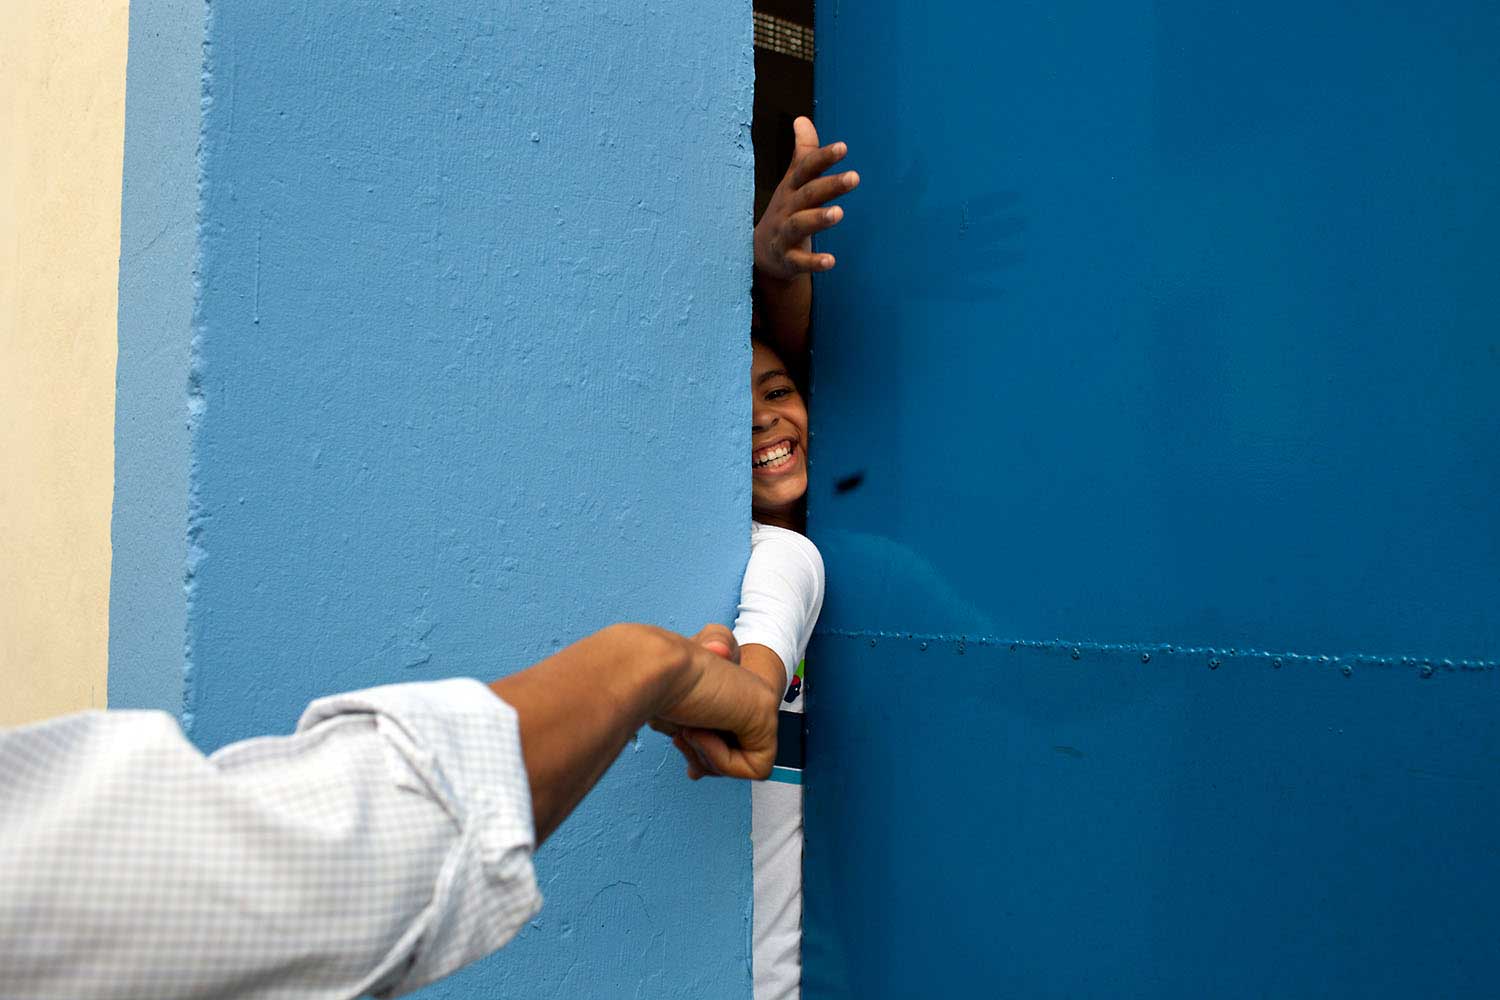 President Obama fist bumps a young person reaching through the door at the Cidade de Deus (City of God) favela Community Center in Rio de Janeiro, Brazil, March 20, 2011.